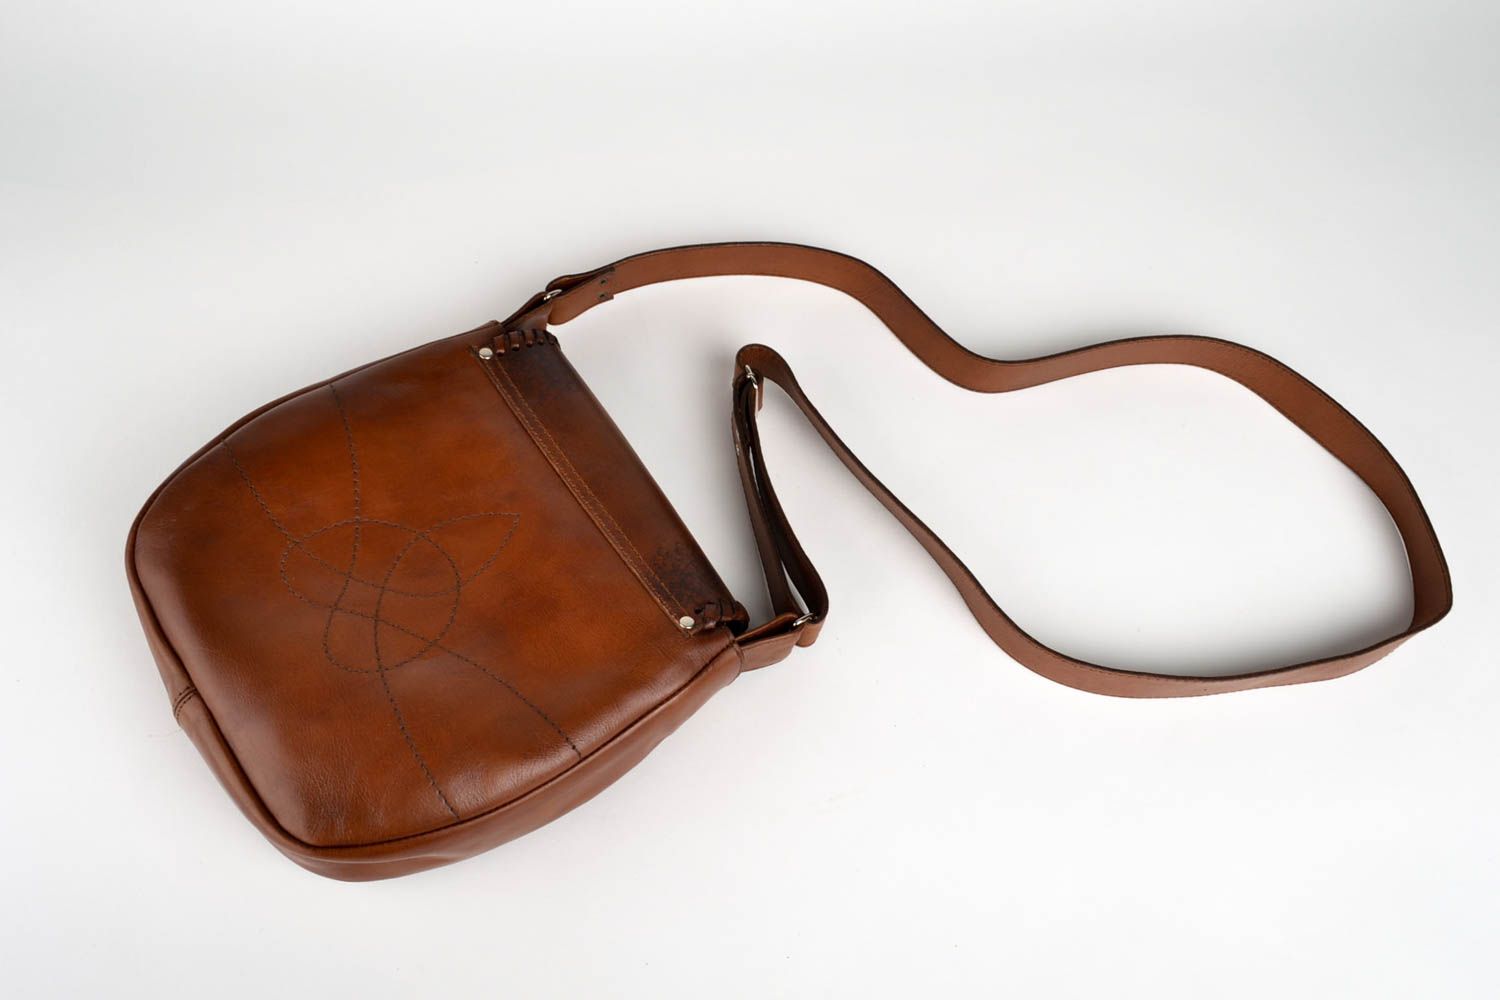 Leather purse stylish accessories fashion shoulder bag designer purse for girls photo 2